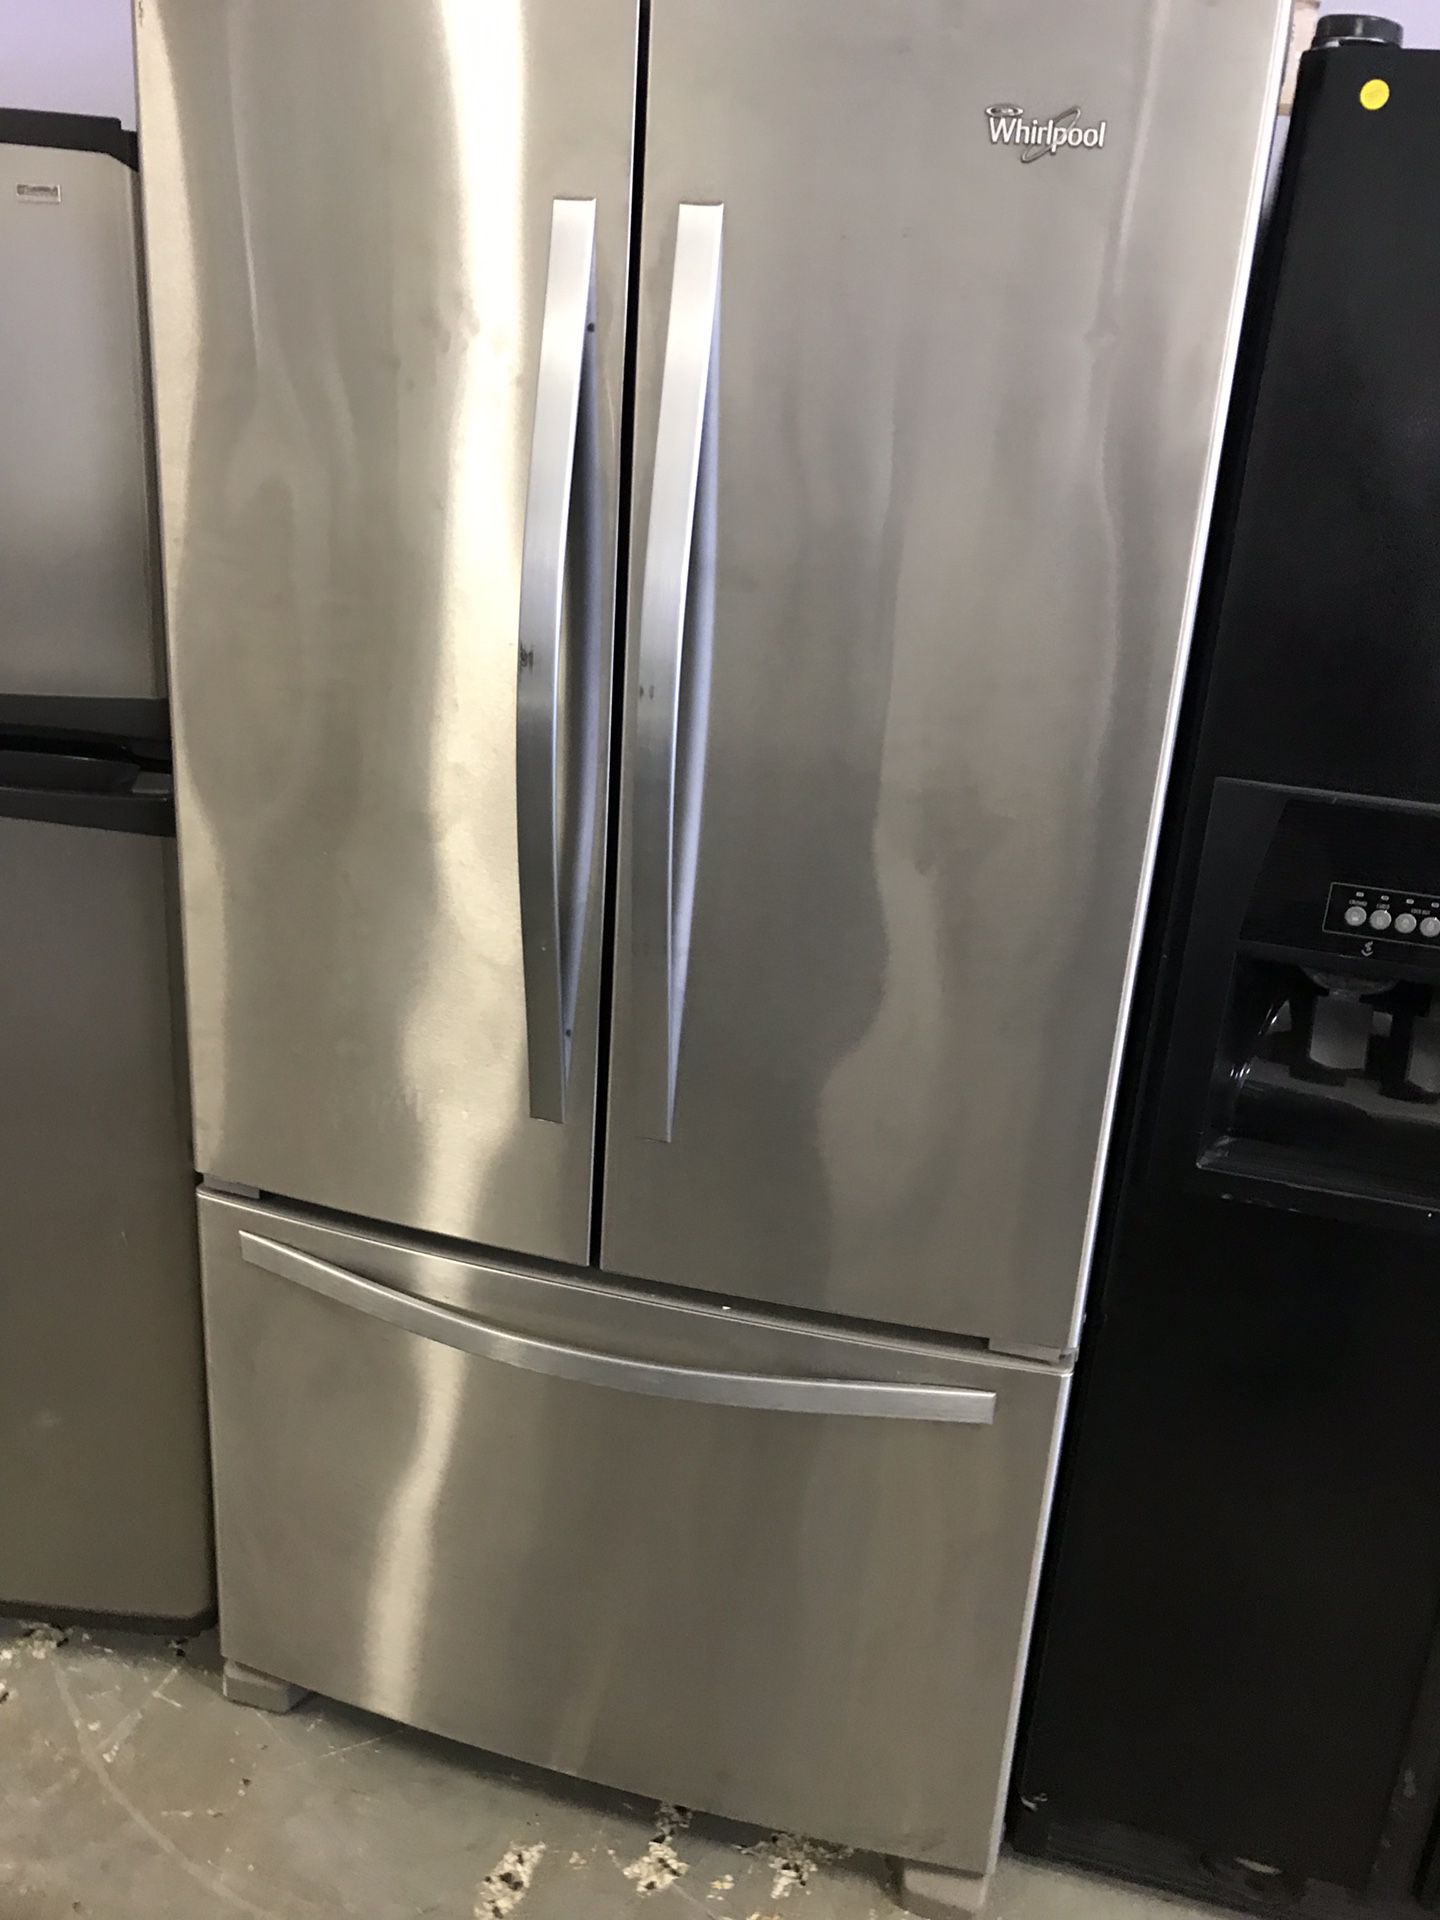 Whirlpool brand refurbished stainless steel 36” French door refrigerator works great.